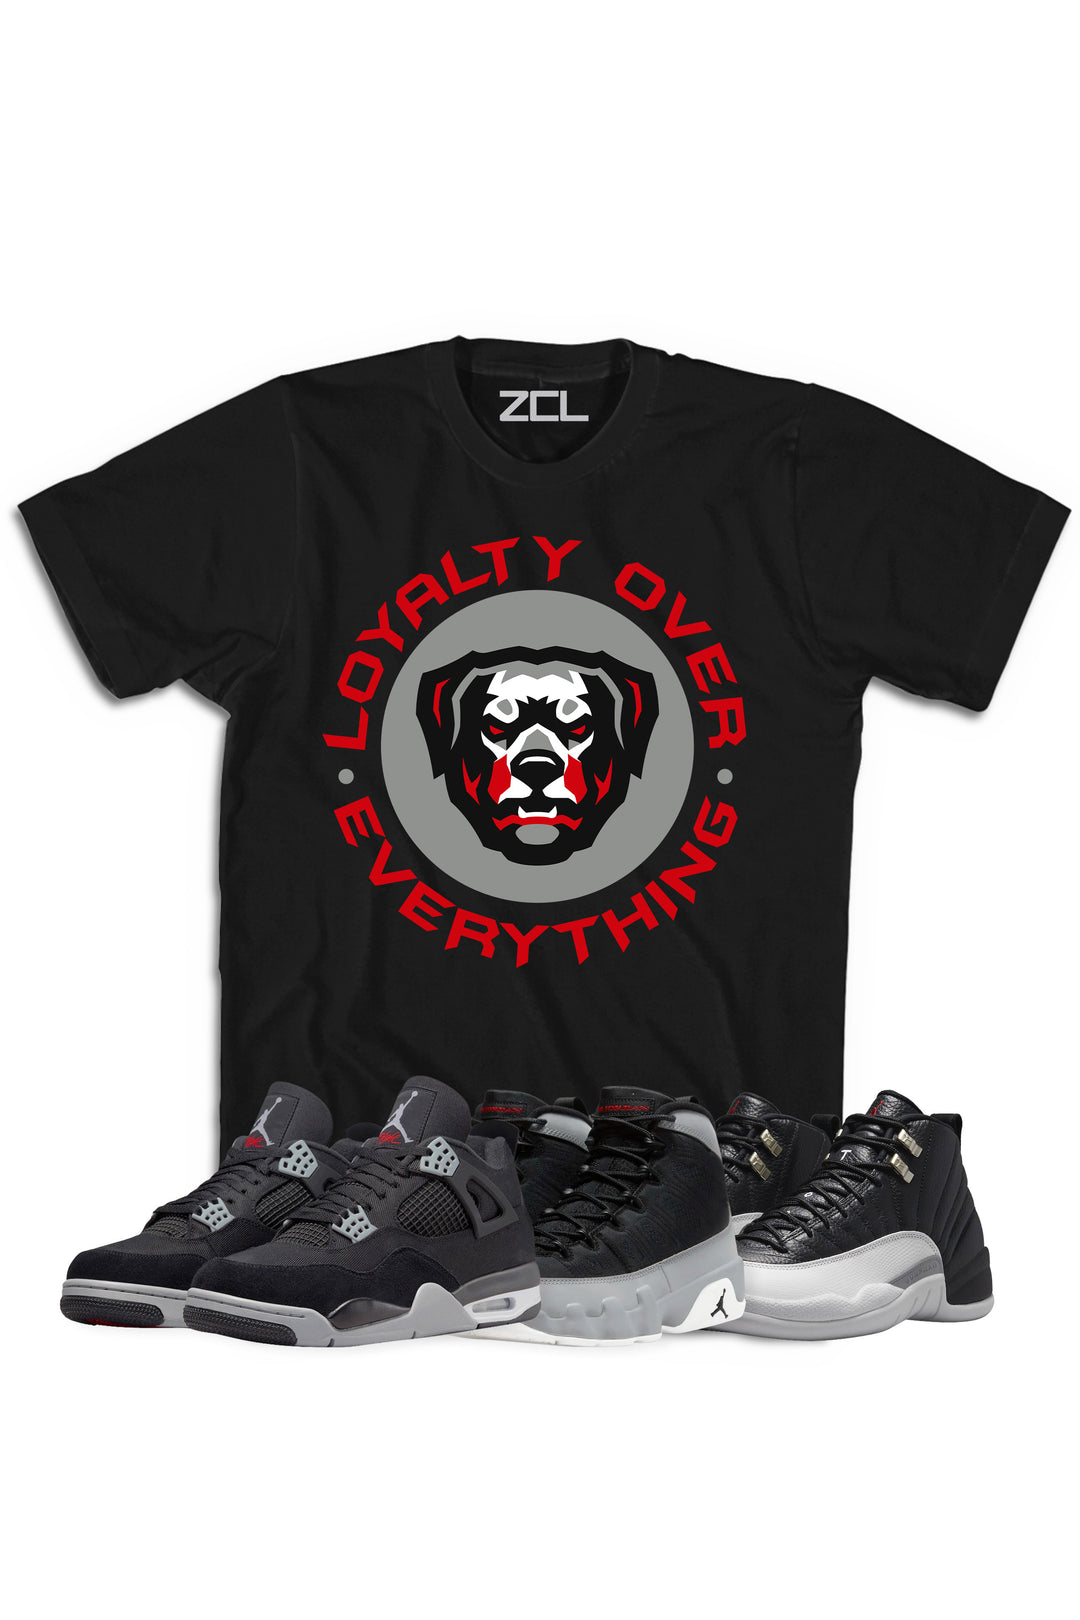 Air Jordan "Loyalty Over Everything" Tee Black Canvas - Zamage